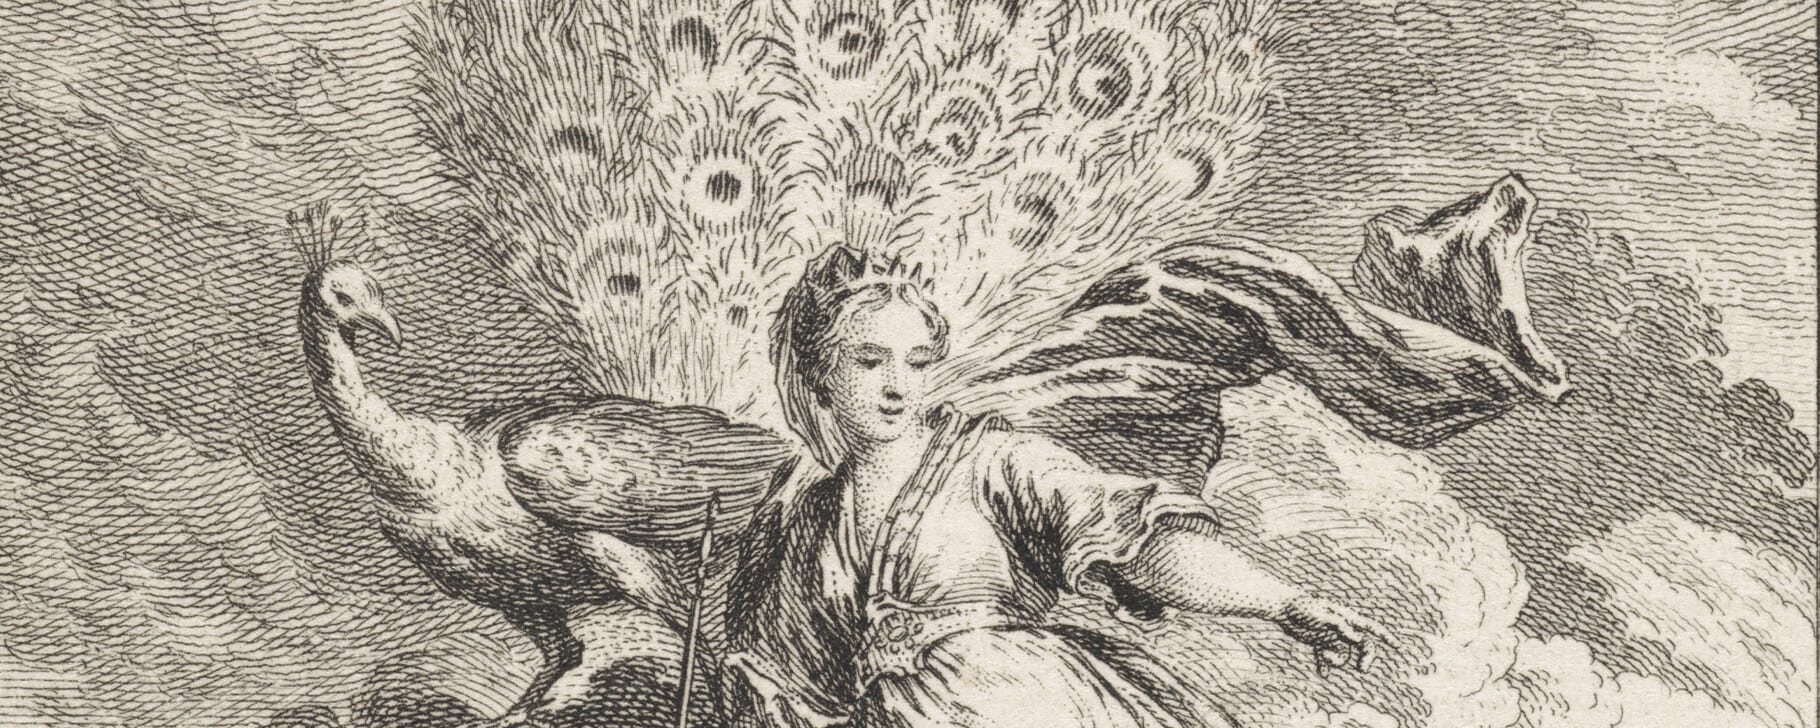 Juno peacock etching